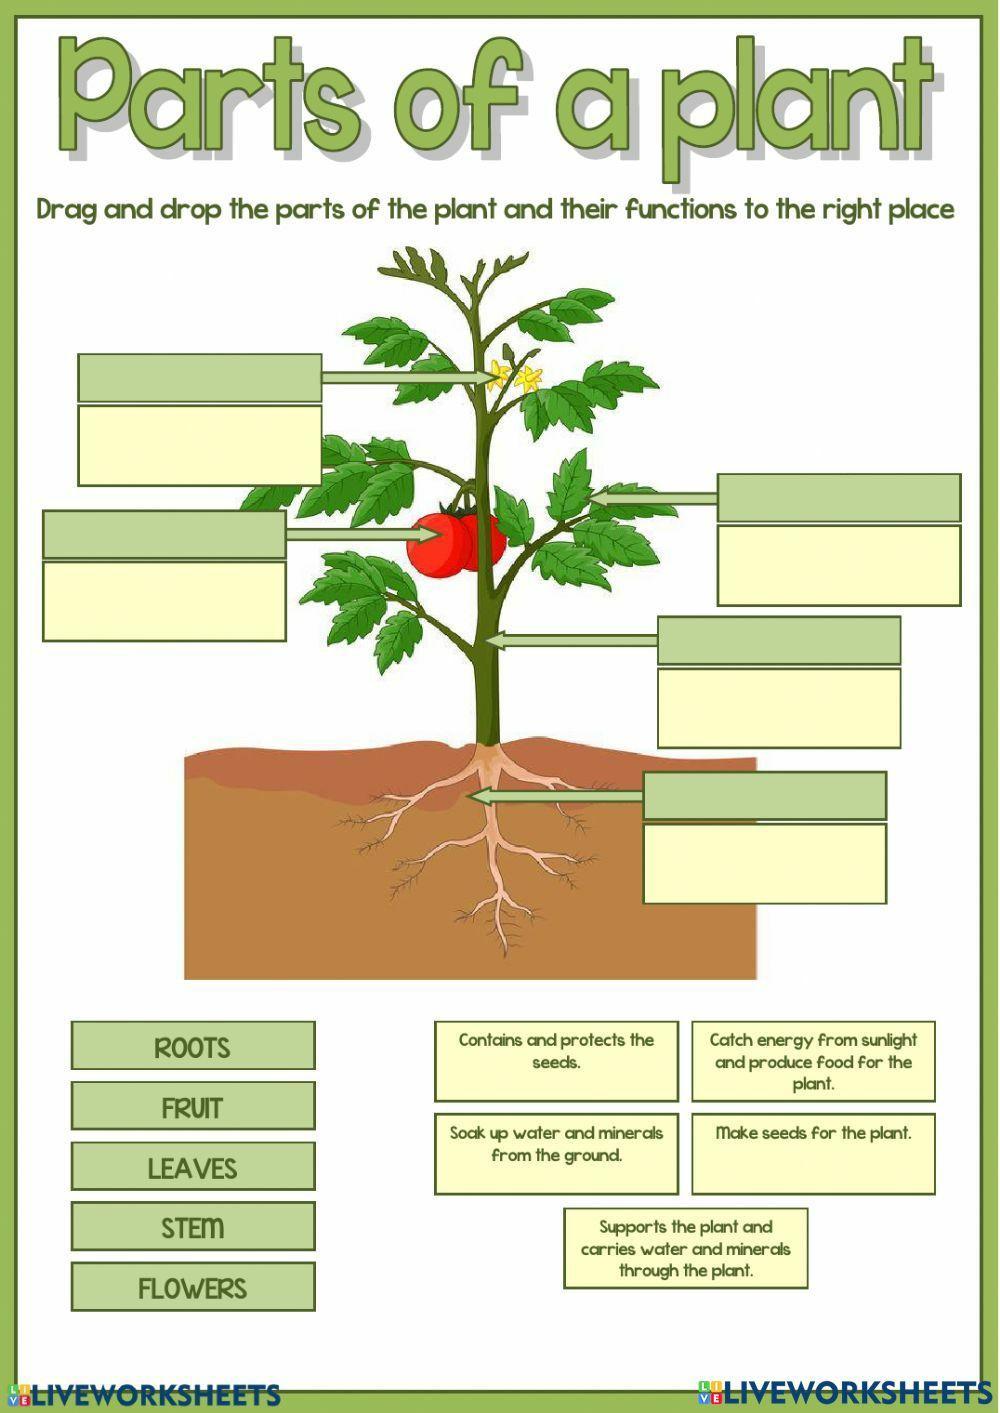 Plants diagram